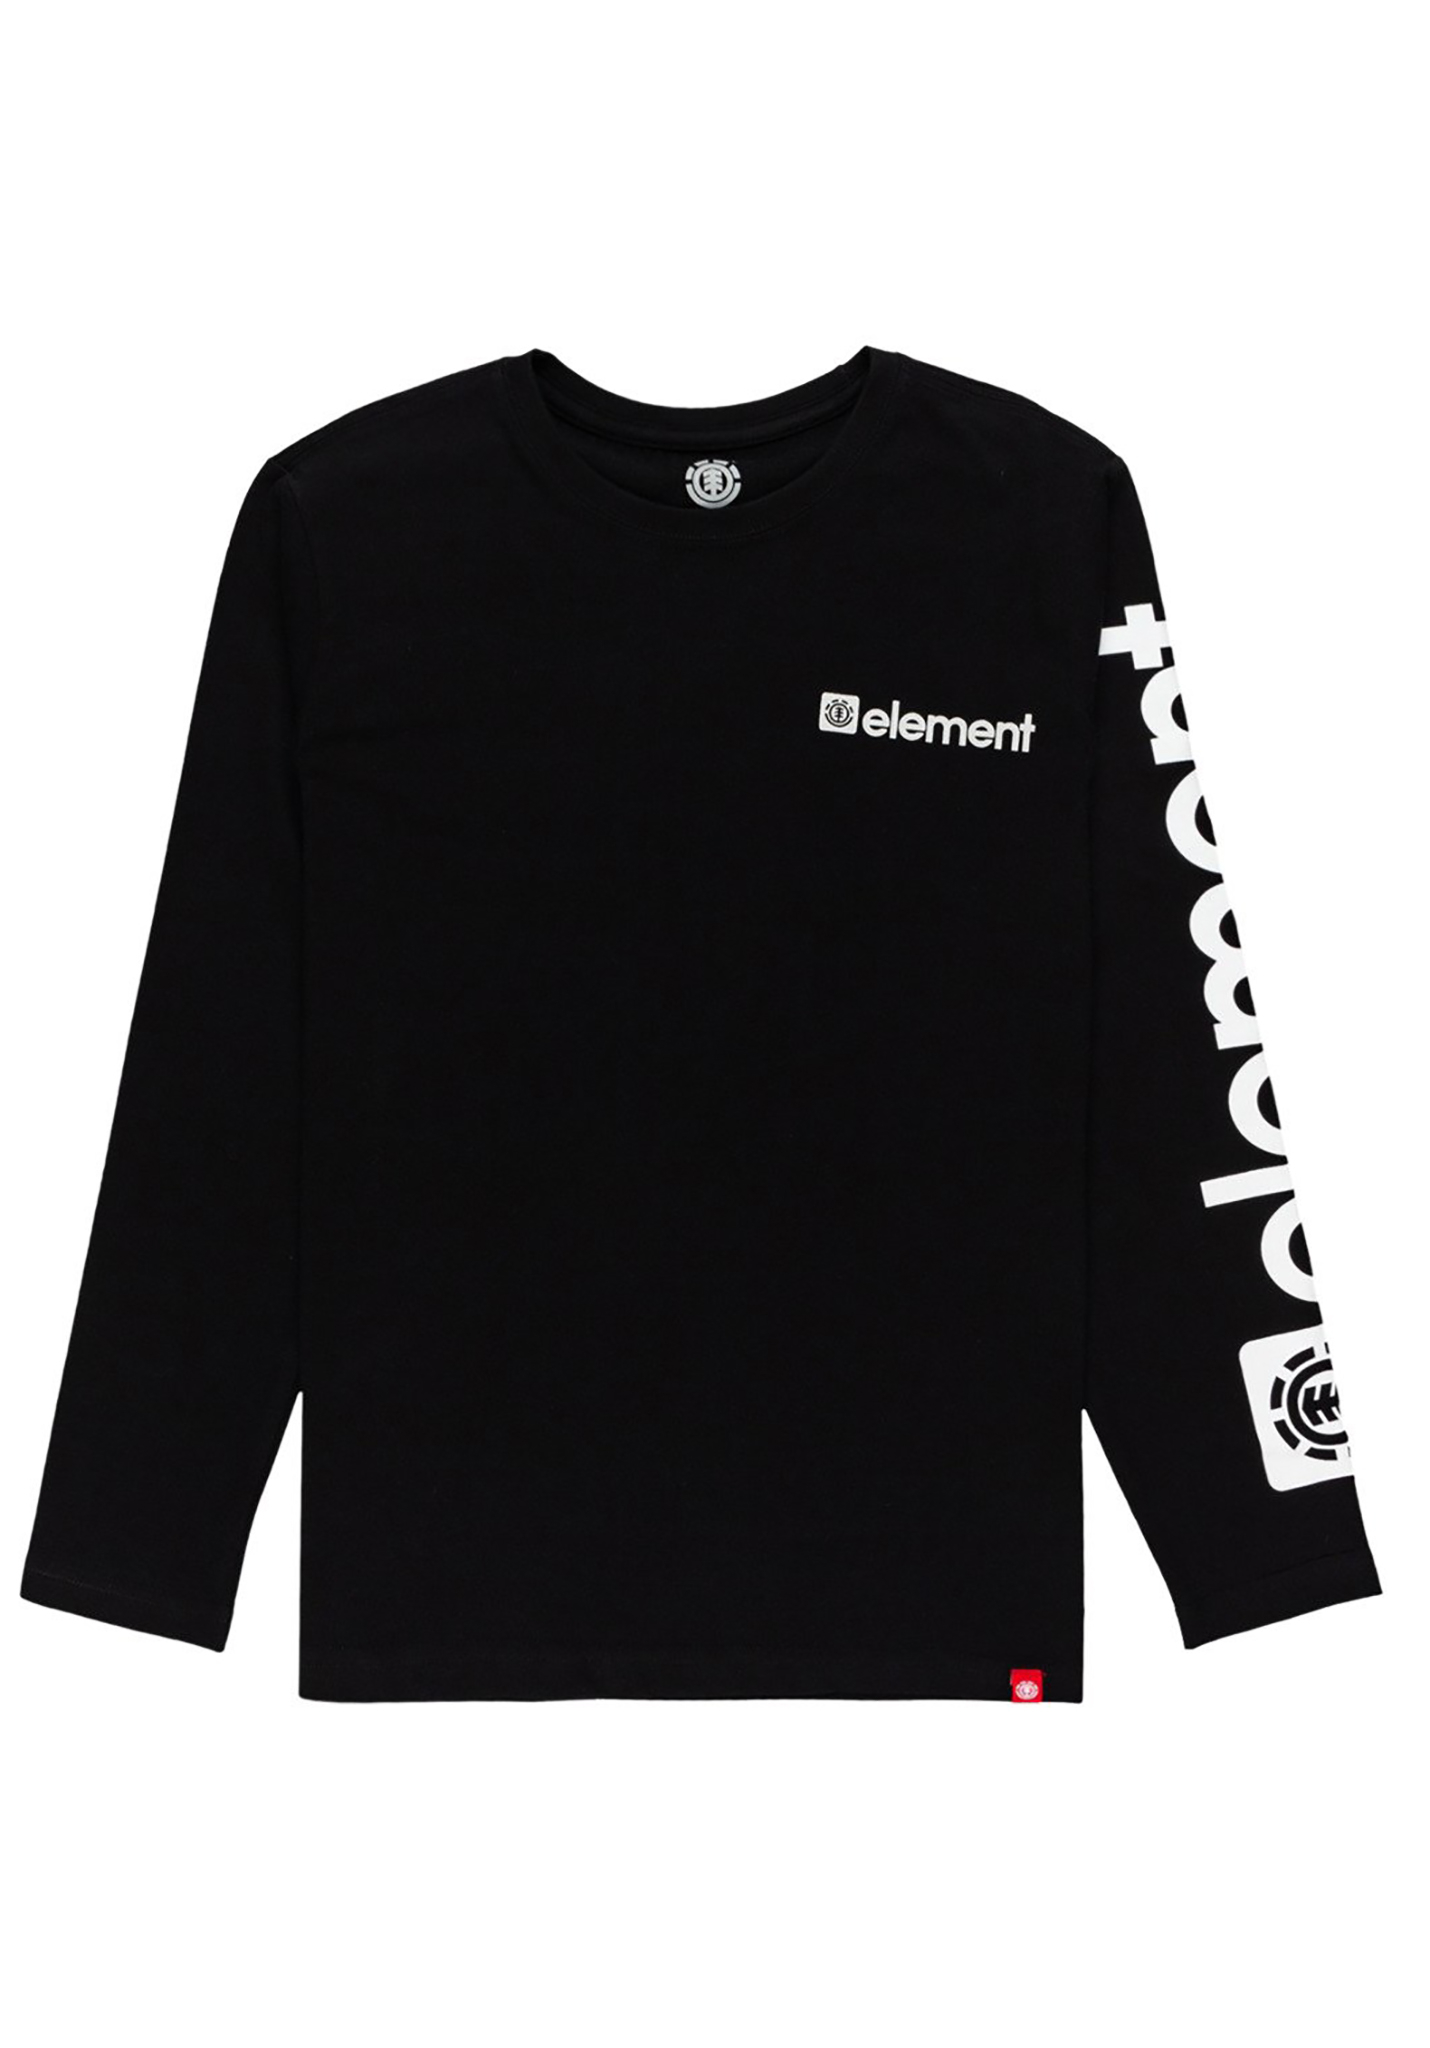 Element Joint T-Shirts flint black 140